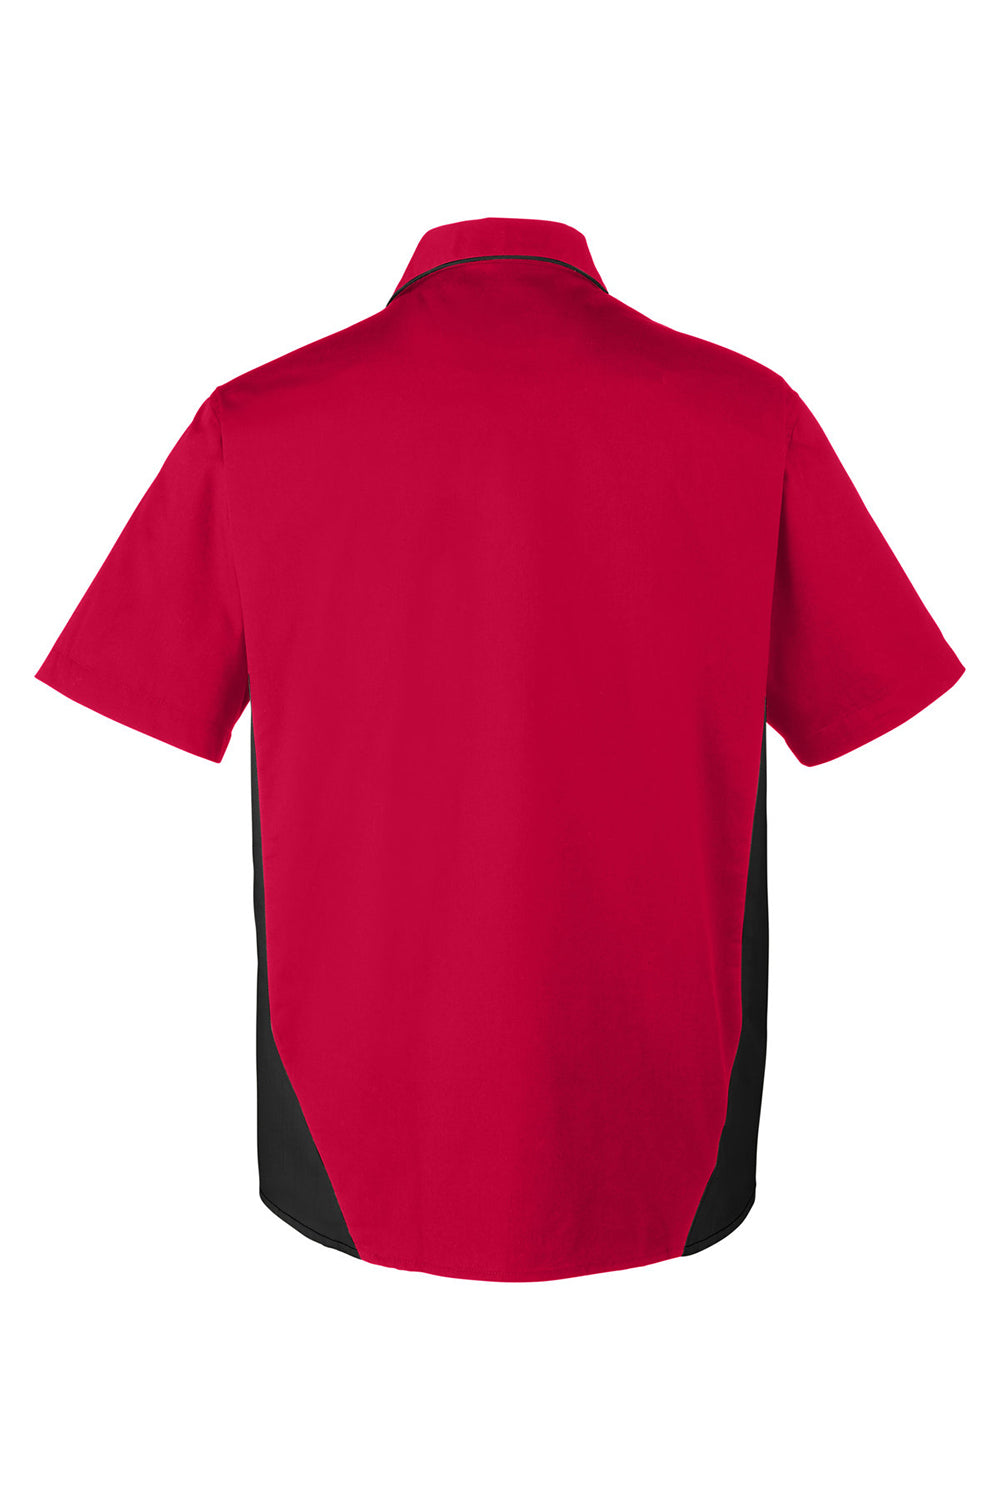 Harriton M586/M586T Mens Flash Colorblock Short Sleeve Button Down Shirt w/ Pocket Red/Black Flat Back